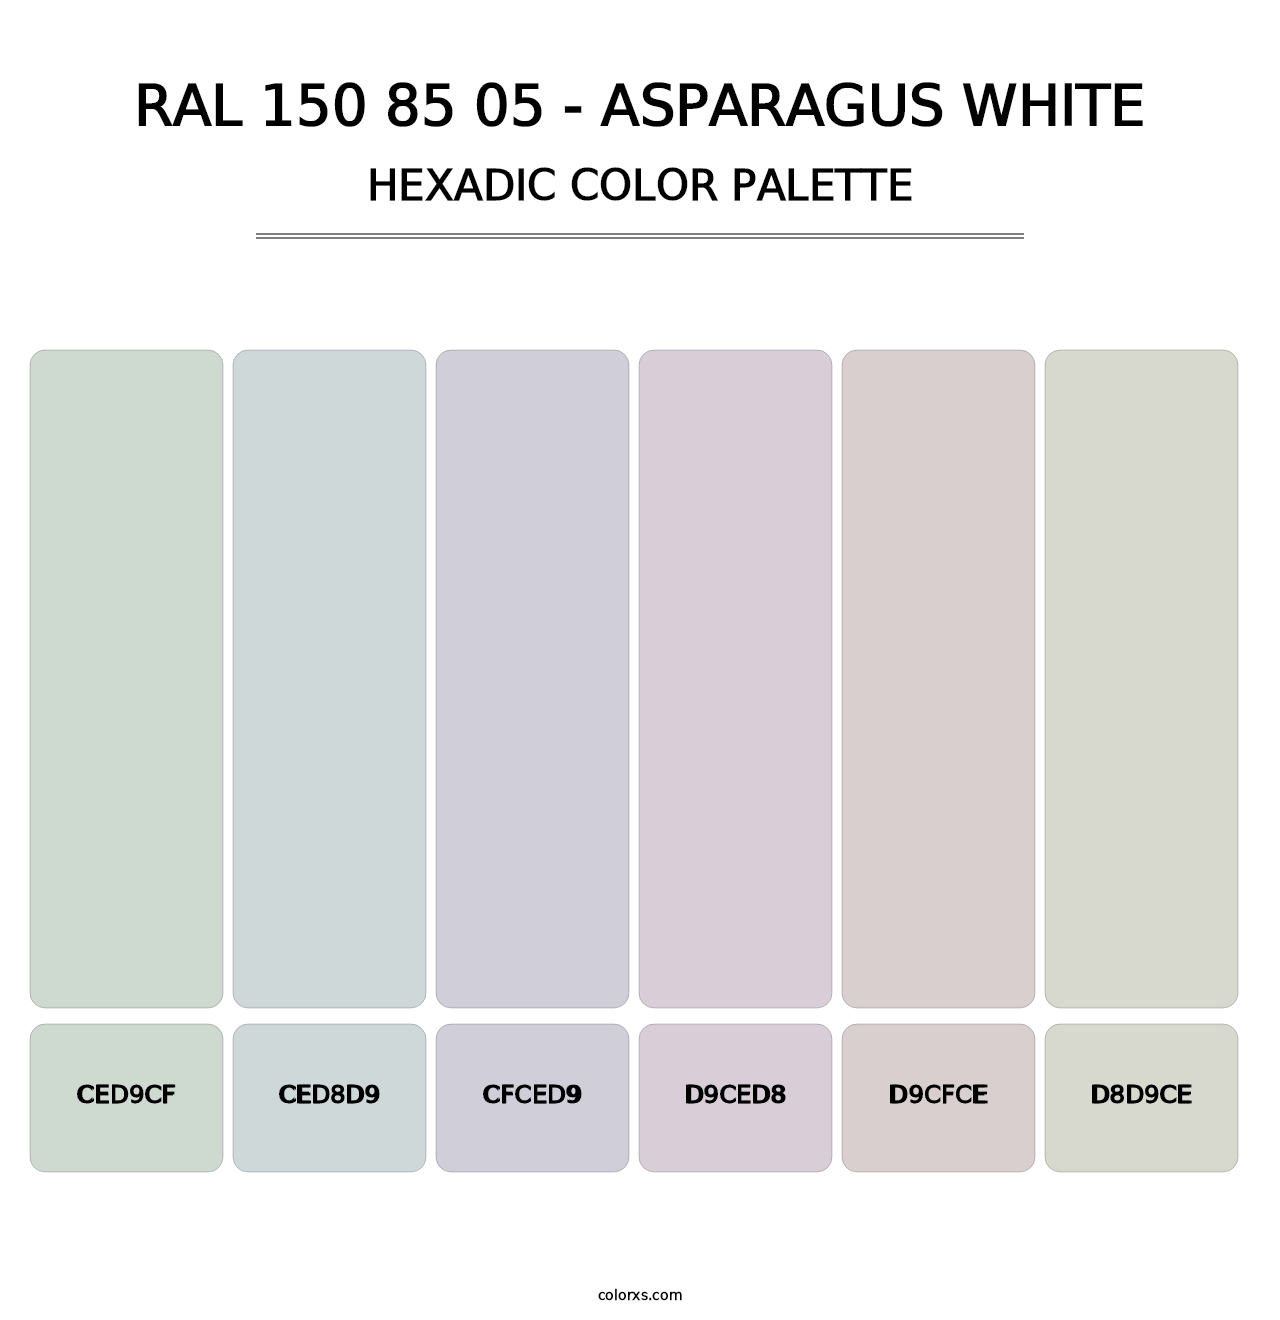 RAL 150 85 05 - Asparagus White - Hexadic Color Palette